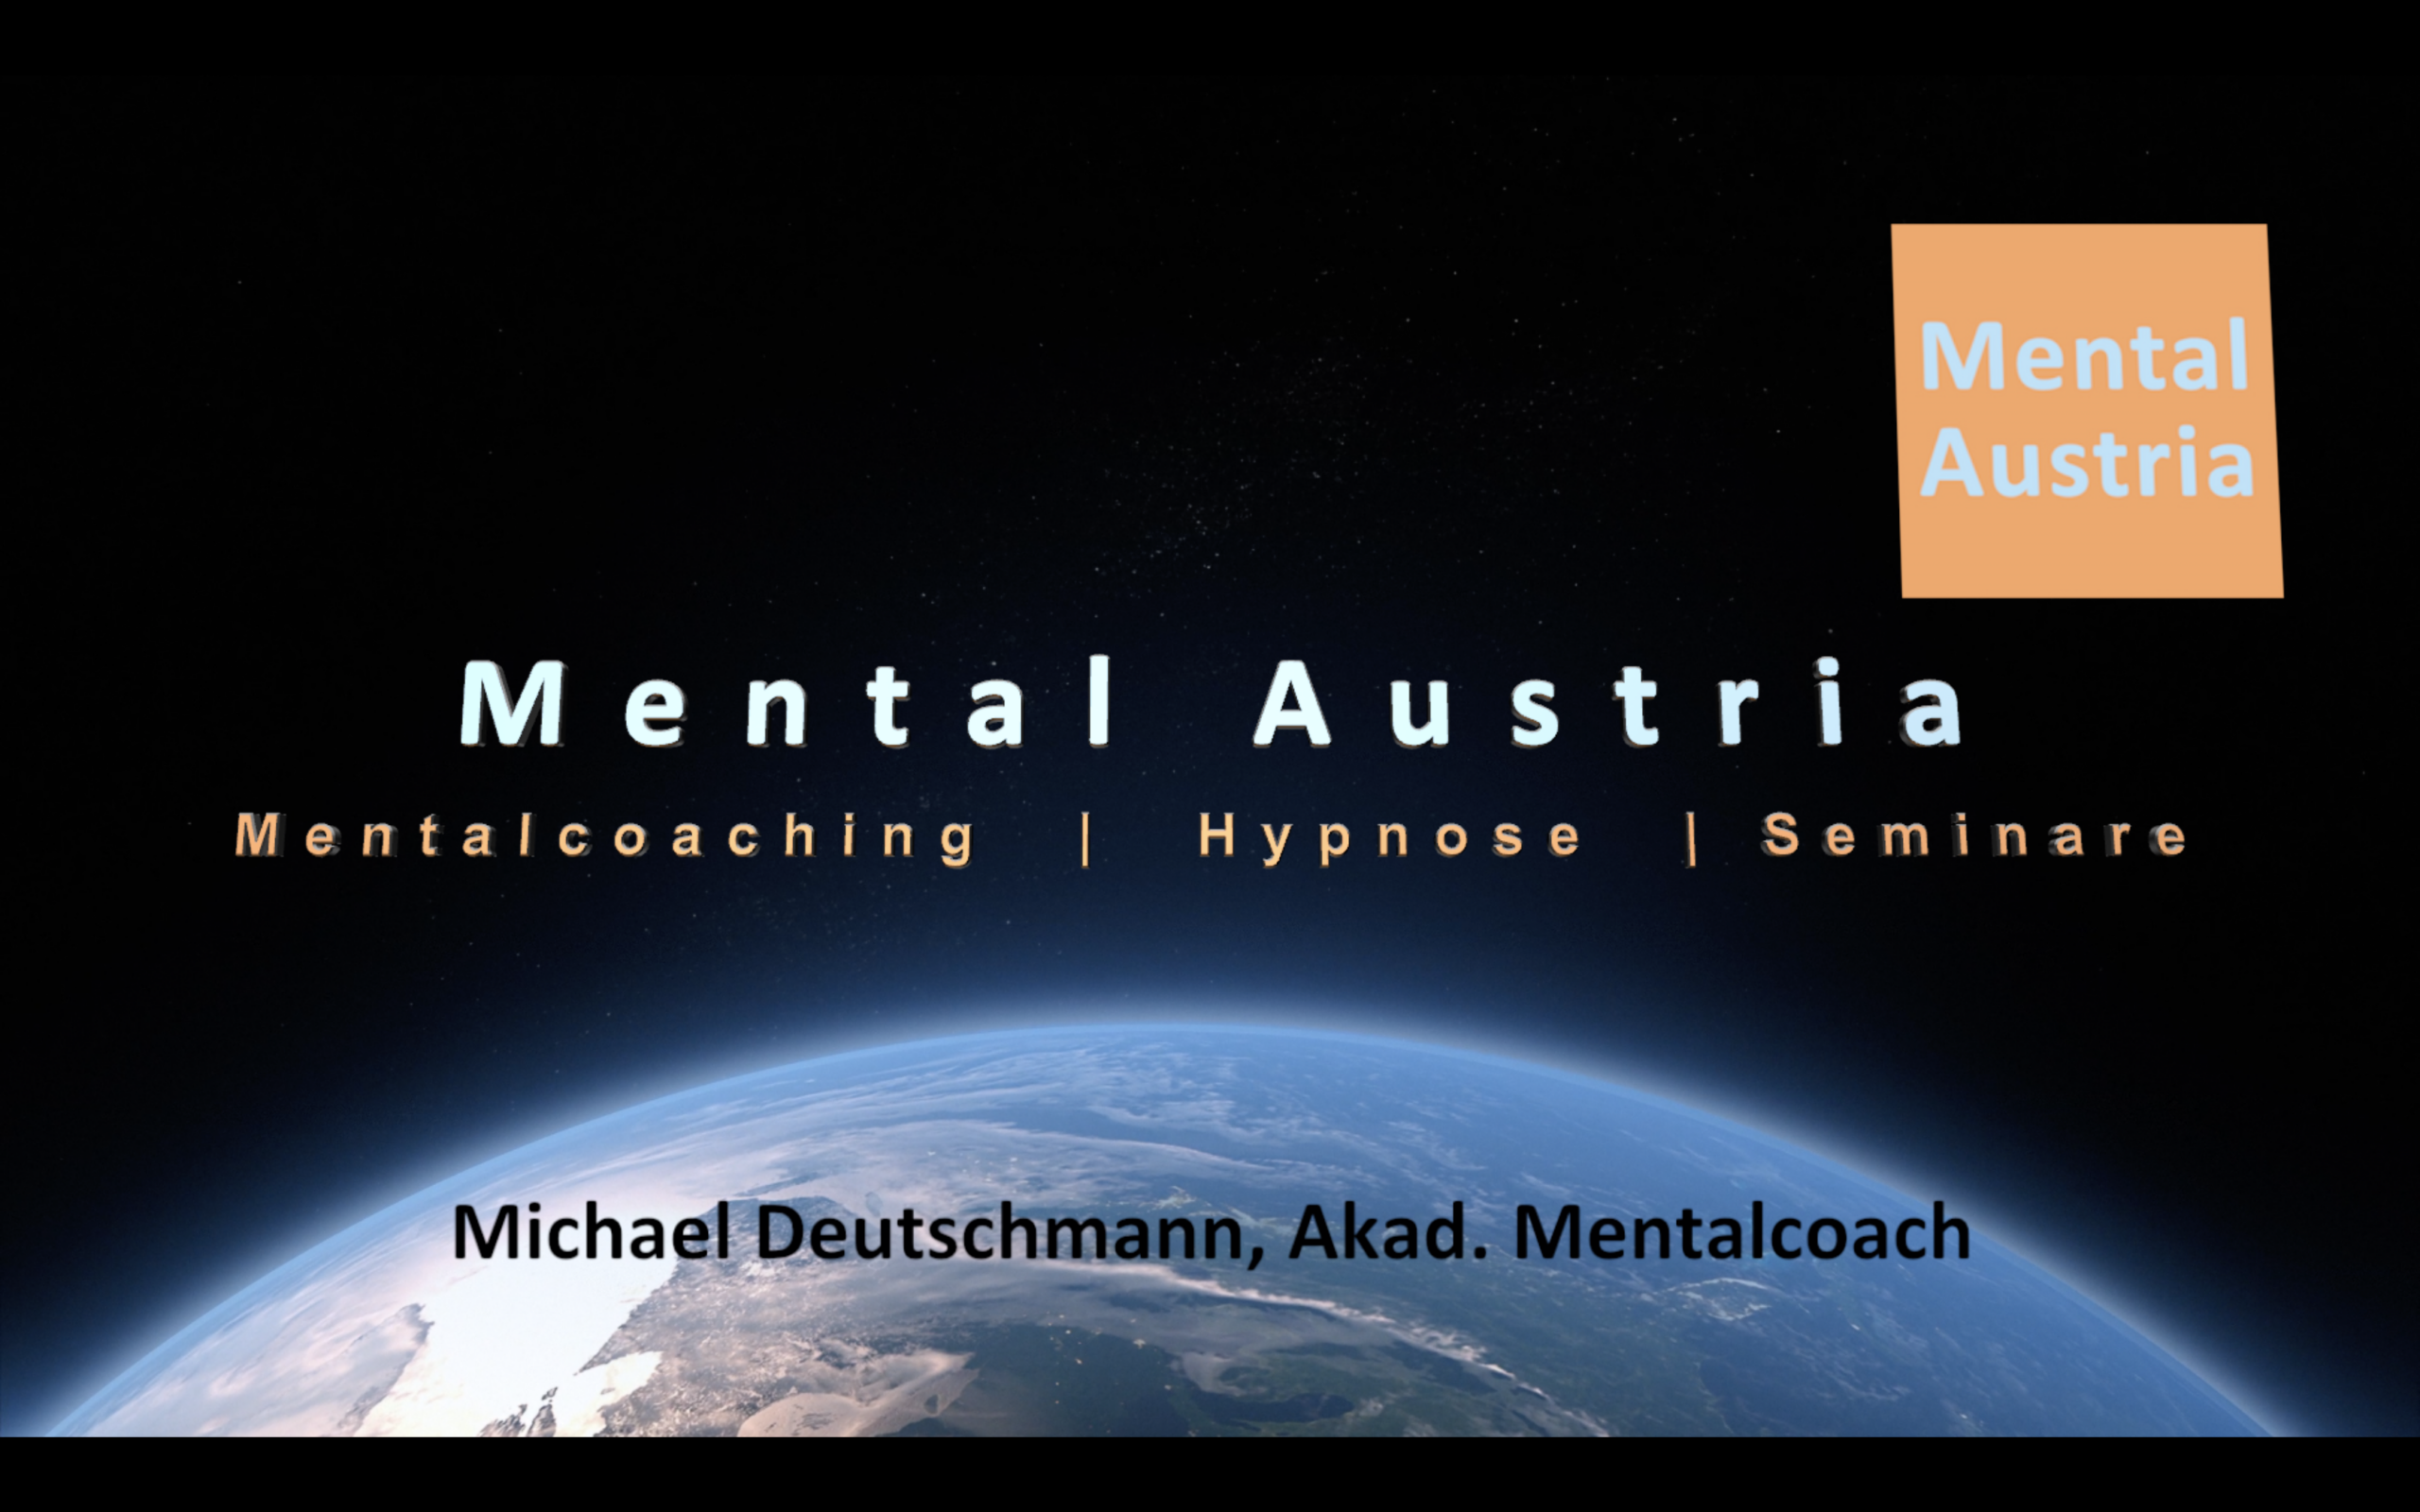 mentalcoaching-mentalcoach-michael-deutschmann-tirol-hypnose-workshops-seminare